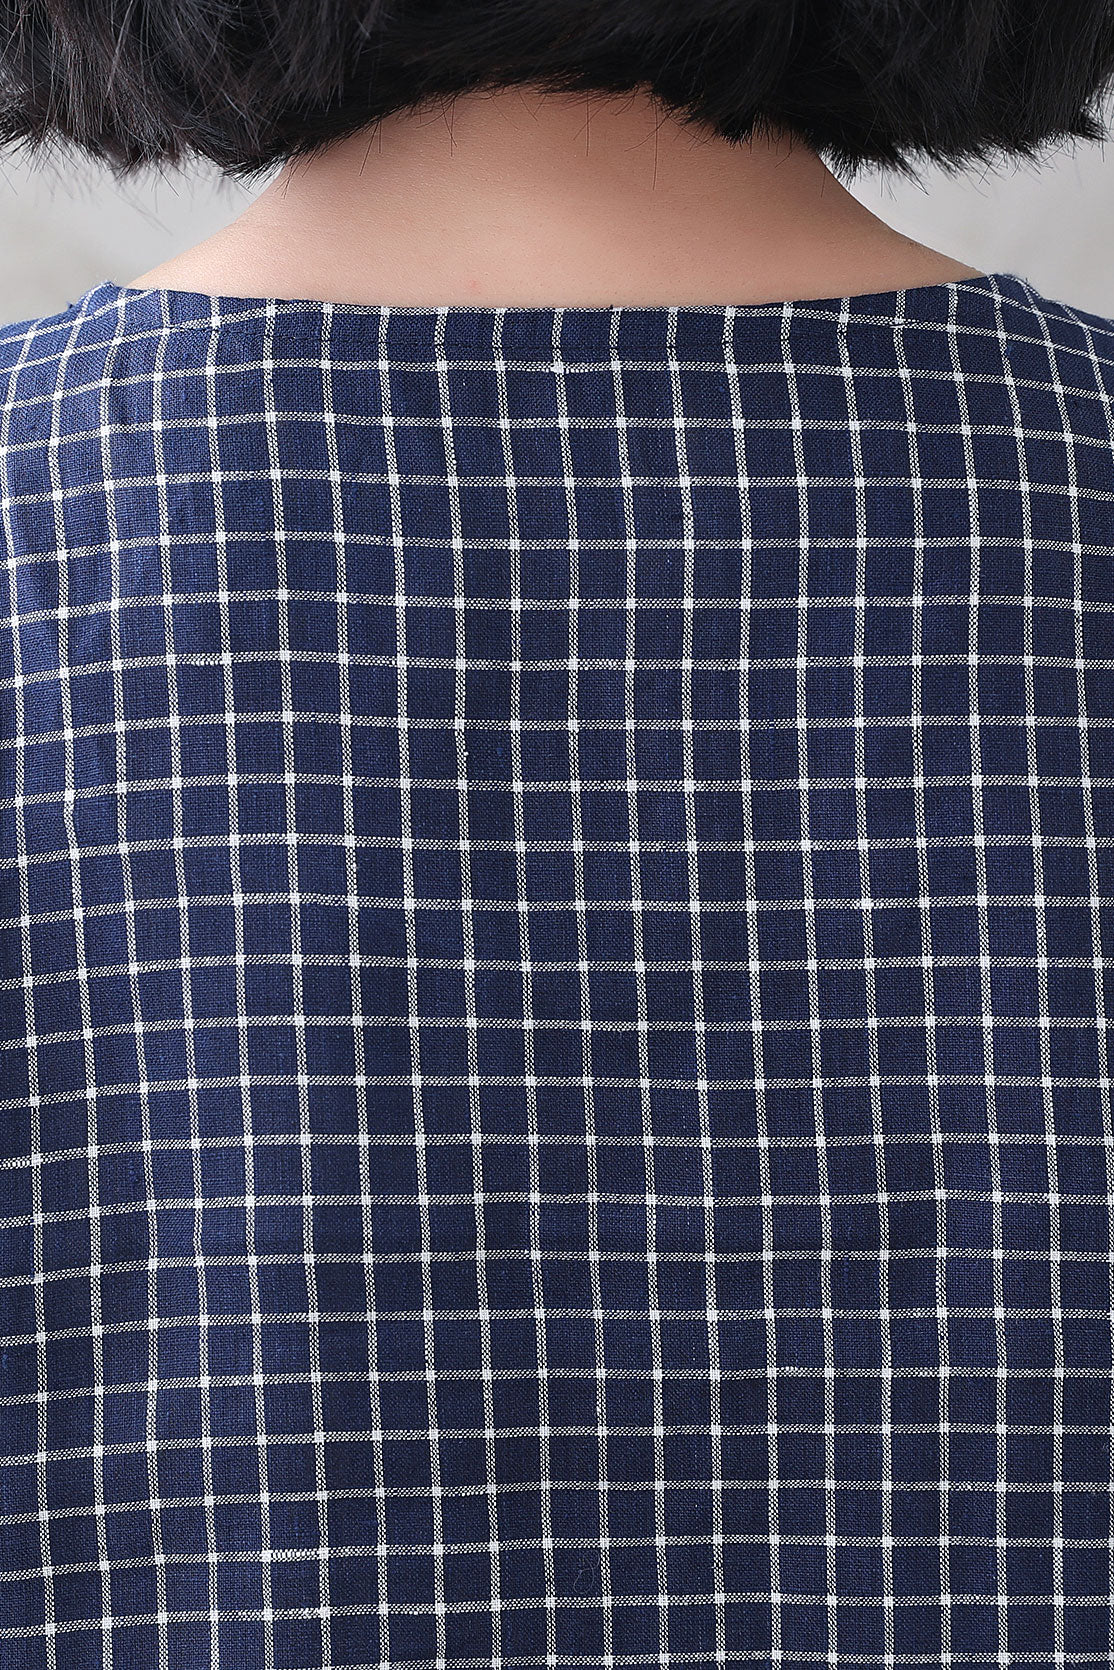 Blue Checked linen blouse 3336#, Size S CK2200419